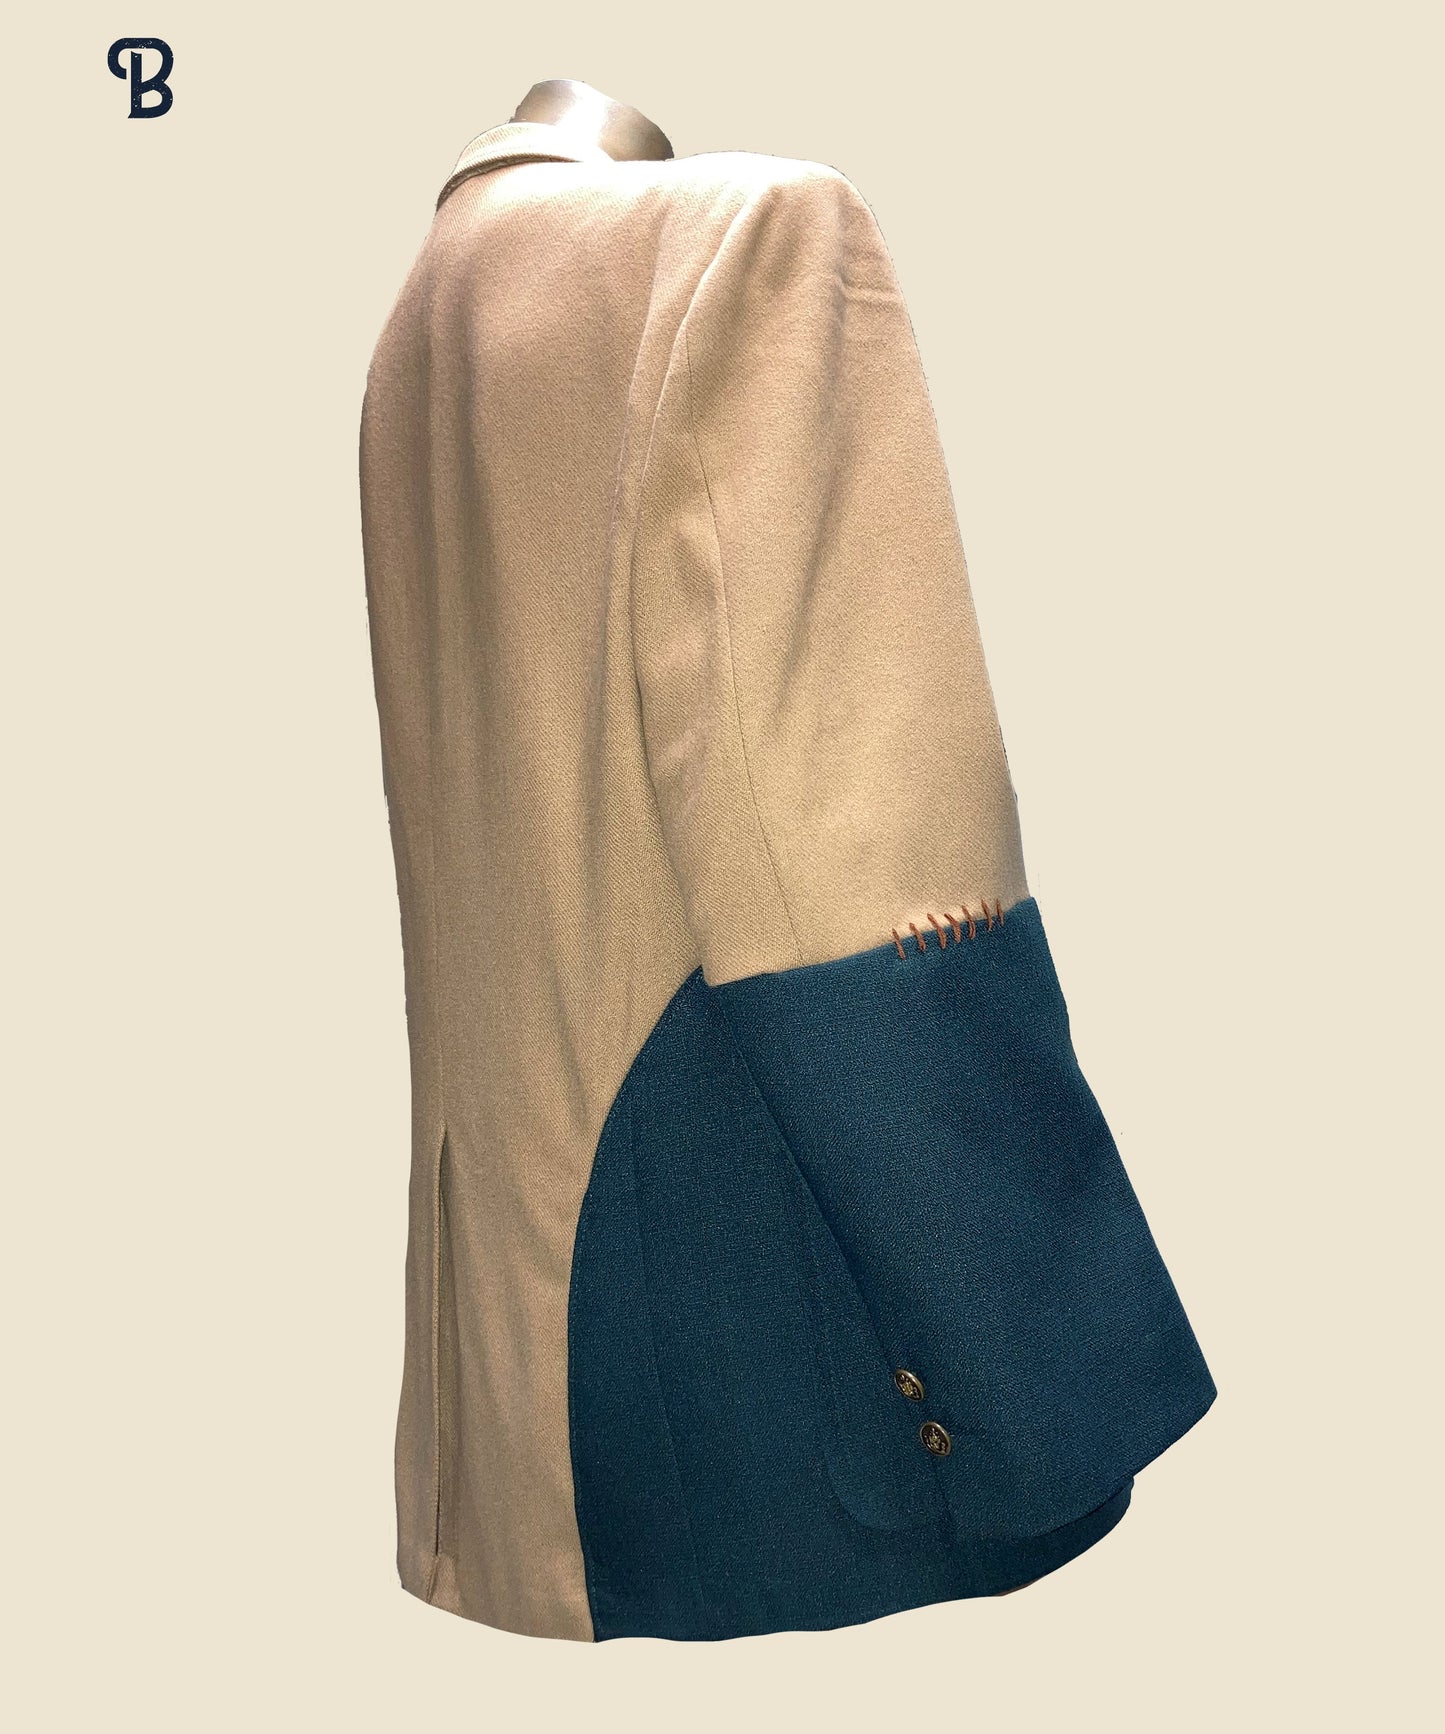 Reimagined Suit Jacket ( Size Medium)